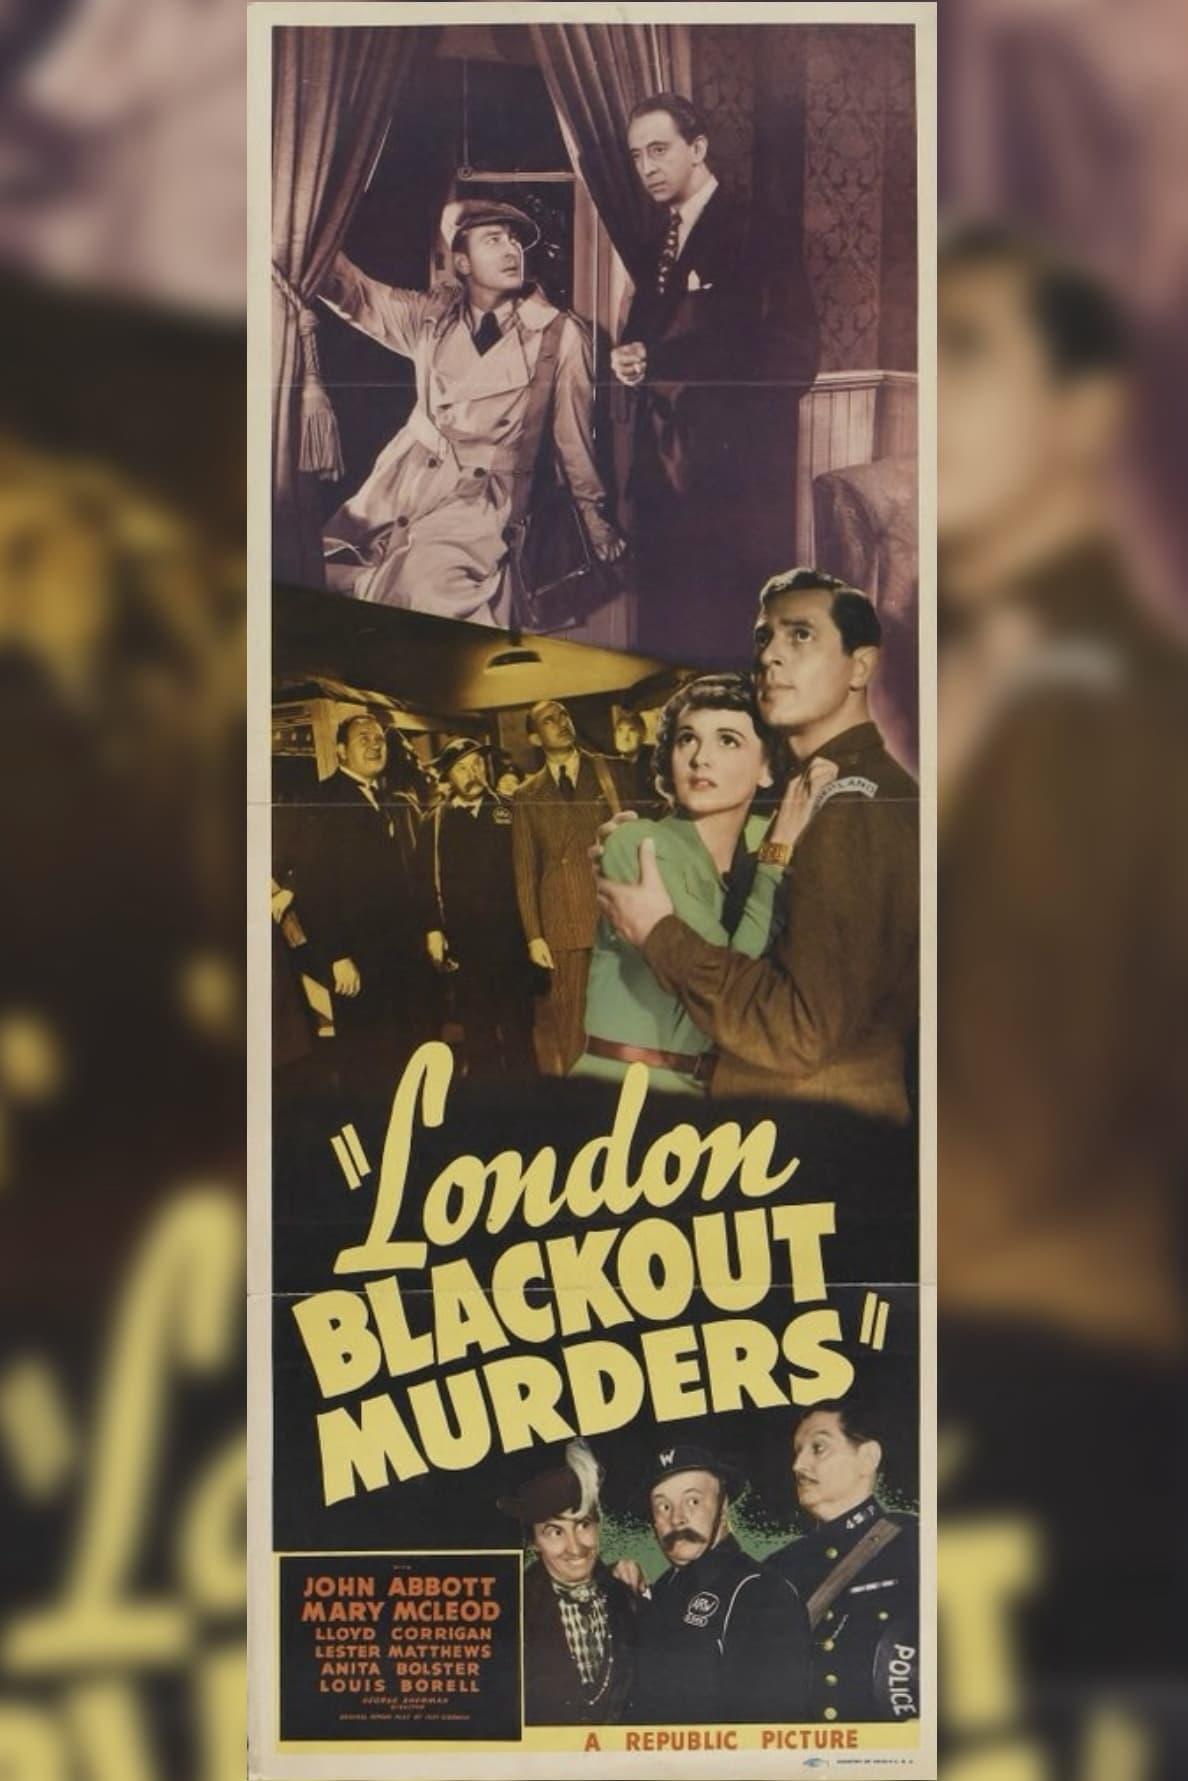 London Blackout Murders poster